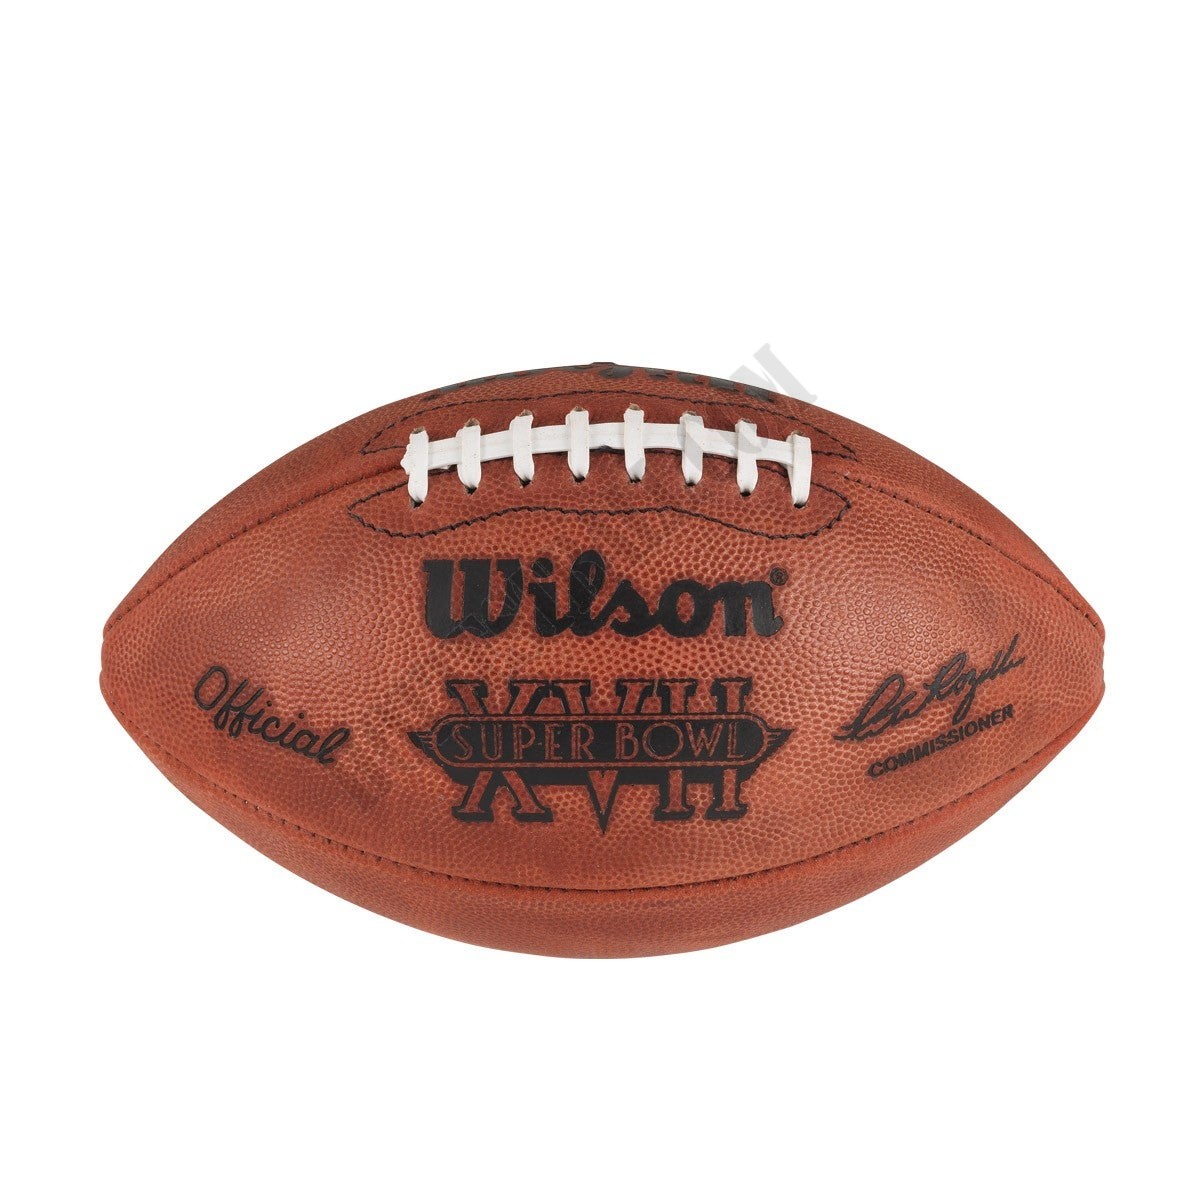 Super Bowl XVII Game Football - Washington ● Wilson Promotions - Super Bowl XVII Game Football - Washington ● Wilson Promotions